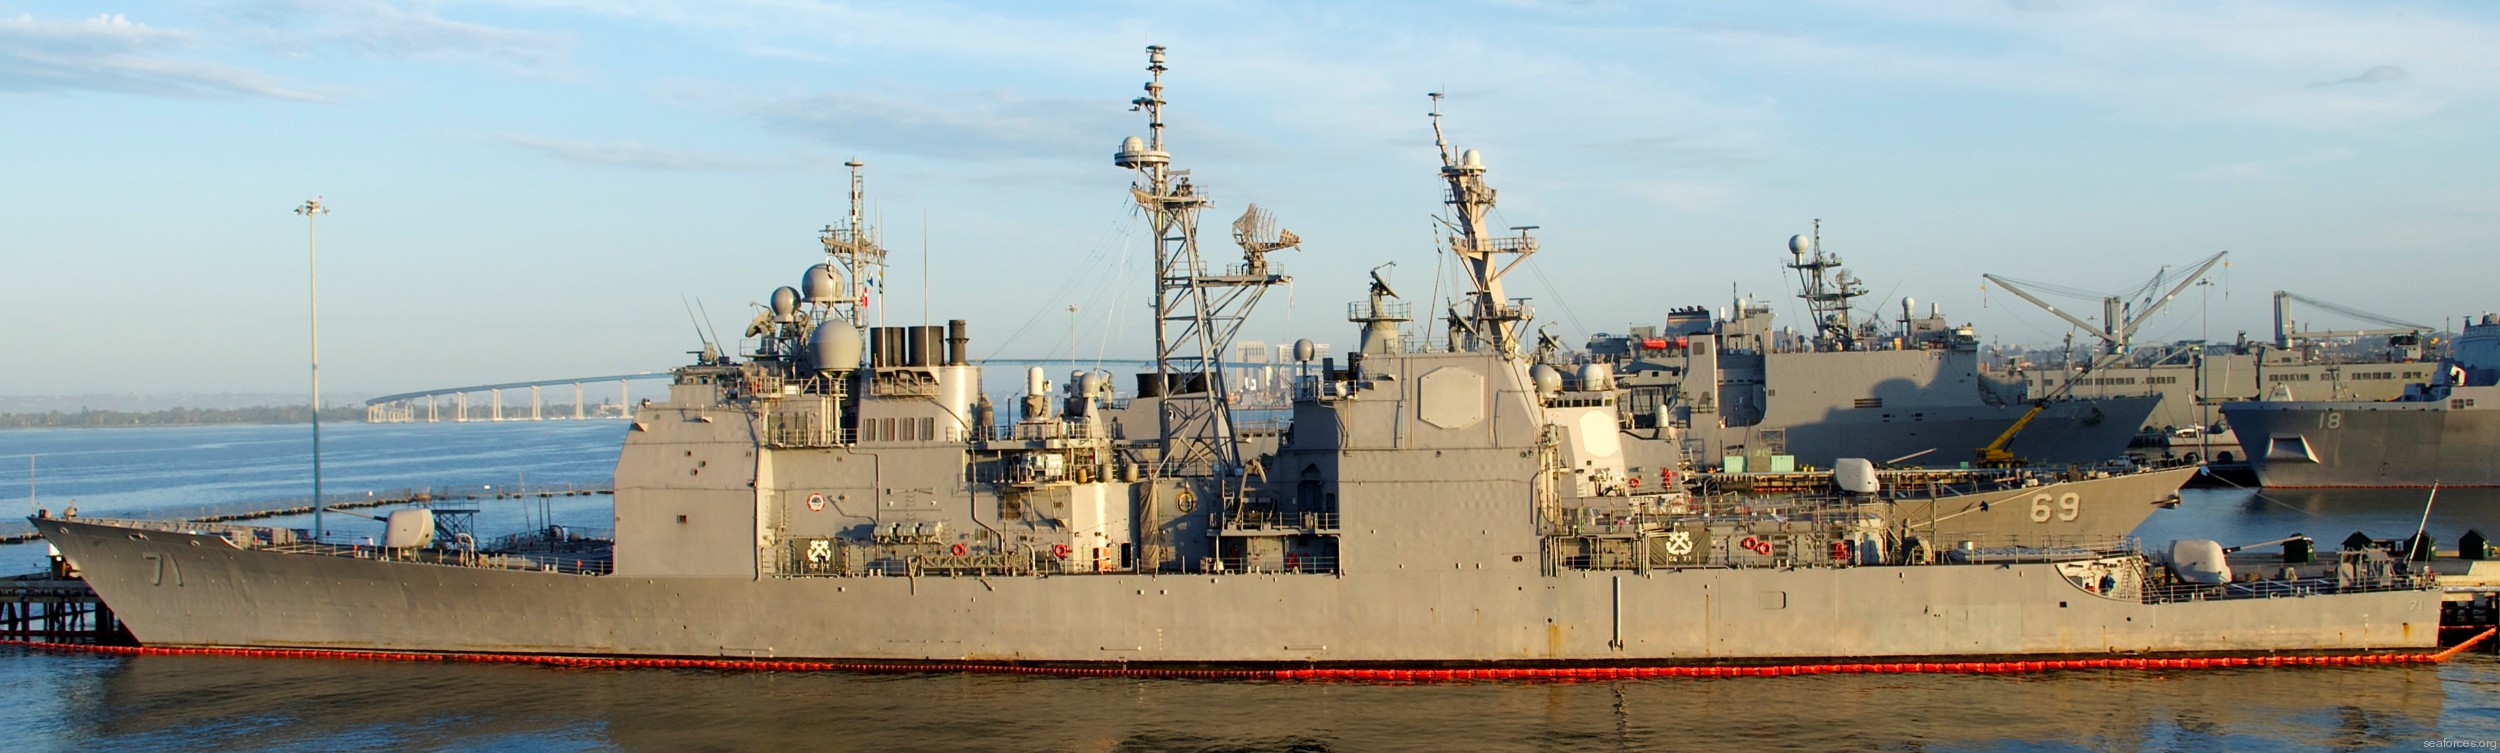 cg-71 uss cape st. george ticonderoga class guided missile cruiser us navy 46 naval base san diego